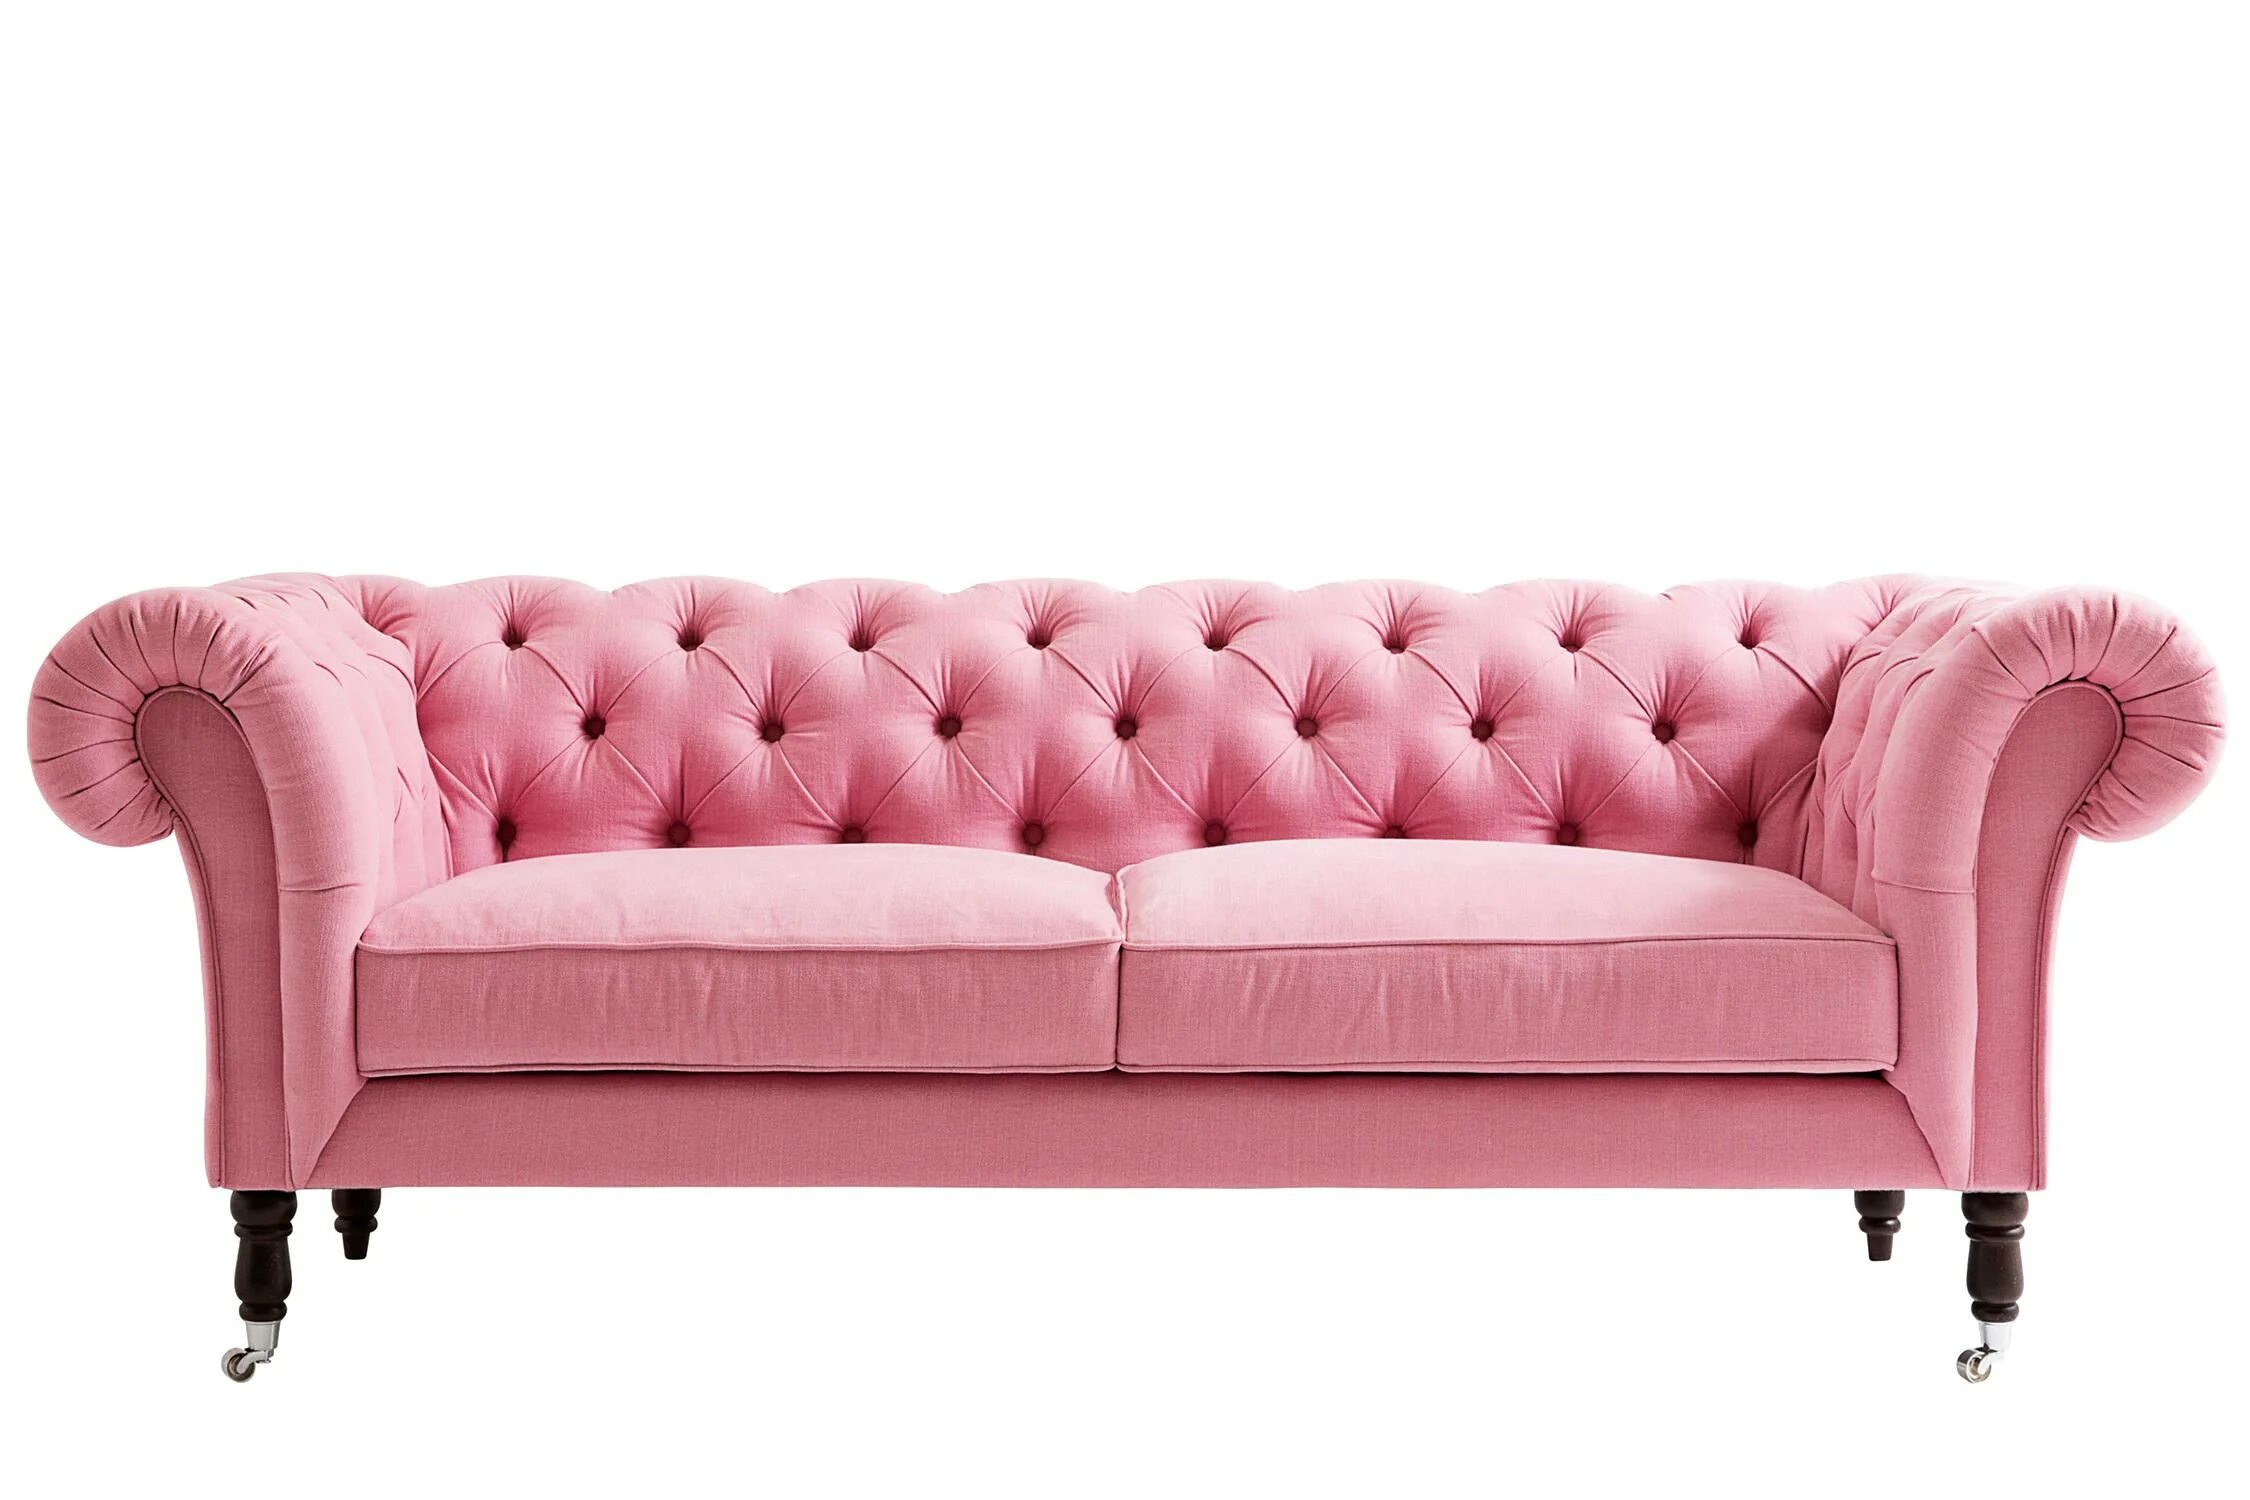 Диван Честер розовый. Пудровый диван Честер. Диван Честер фиолетовый. Честер угловой диван.